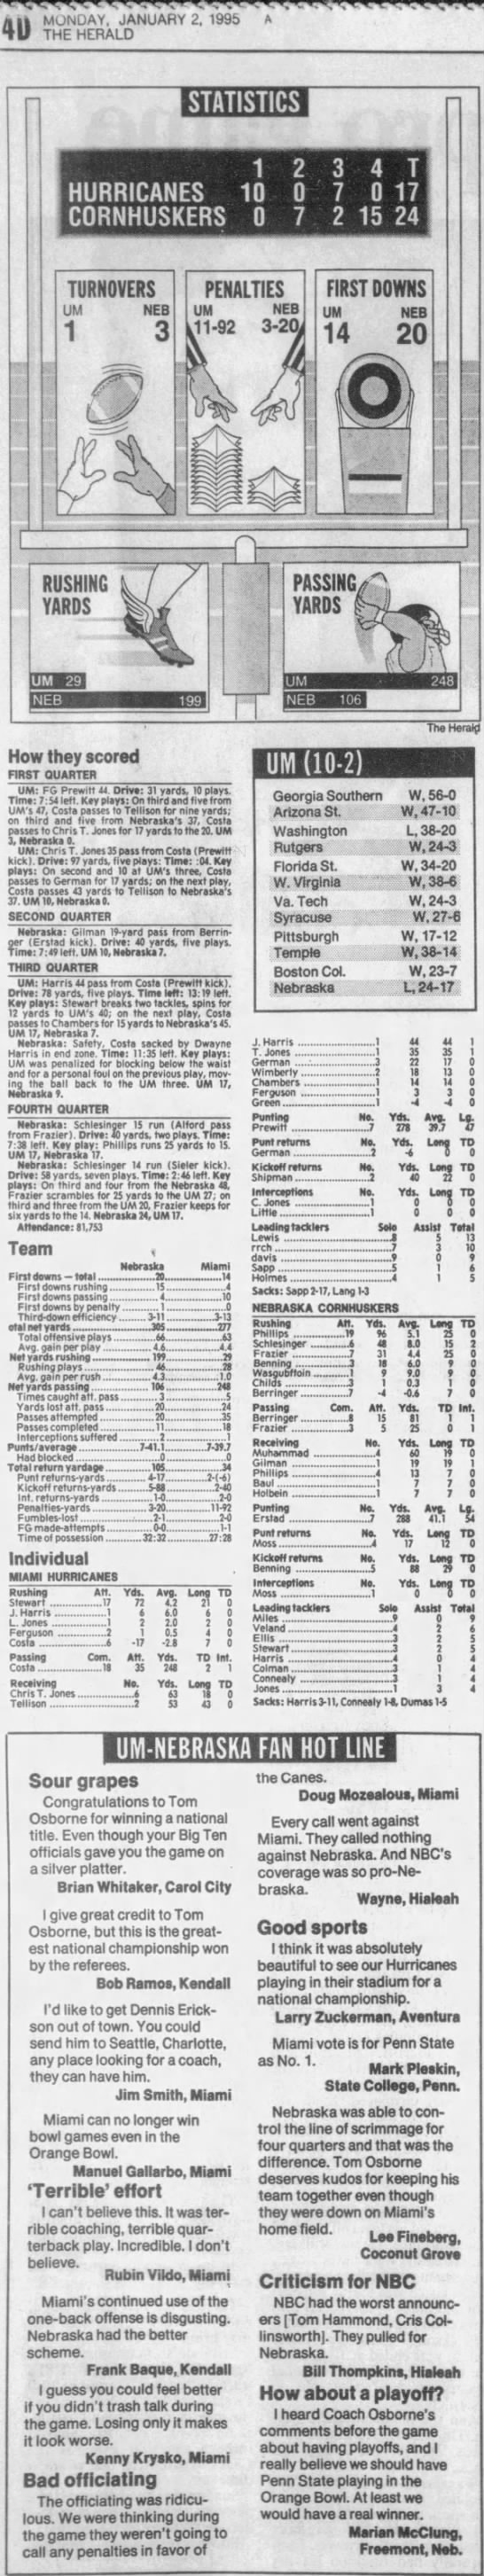 1995 Orange Bowl, Miami stats etc - 